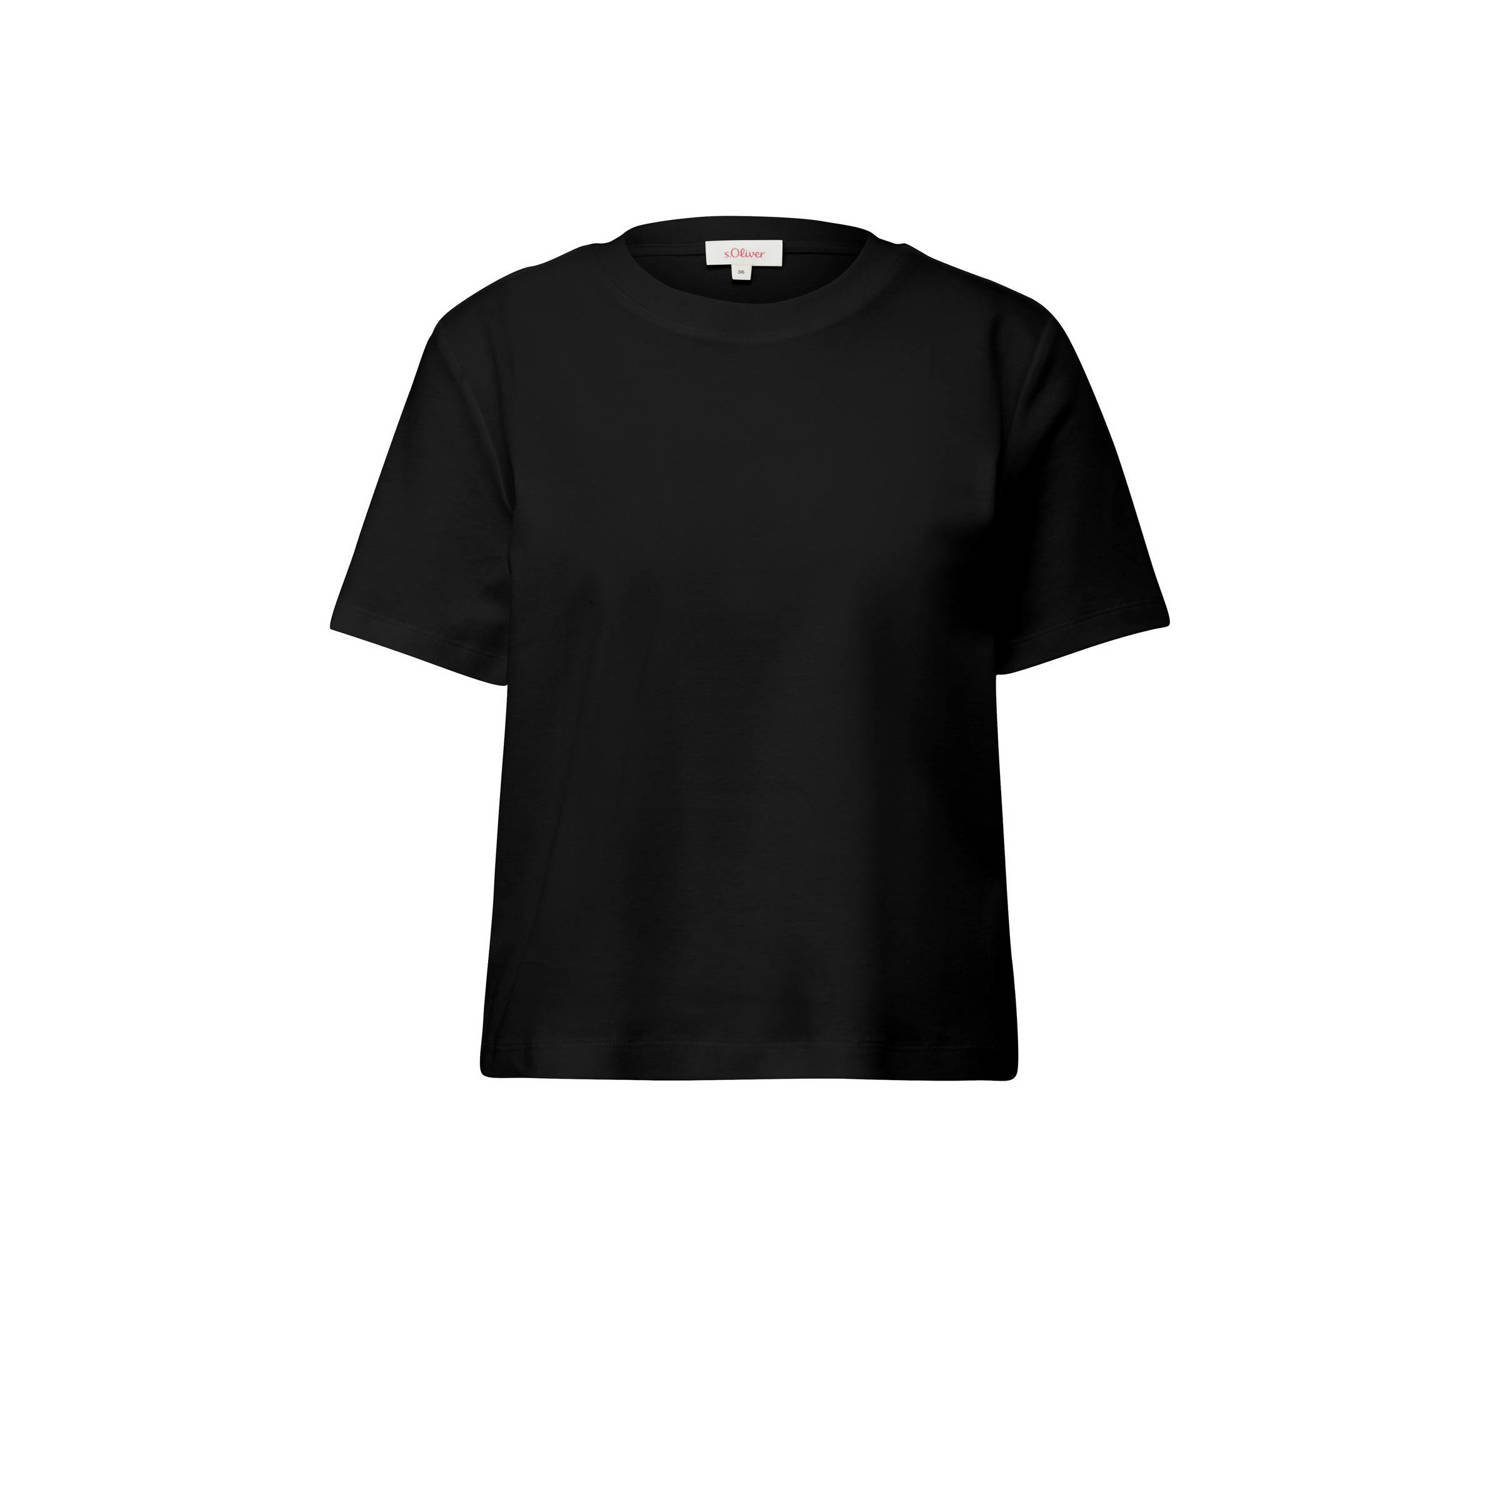 S.Oliver T-shirt zwart